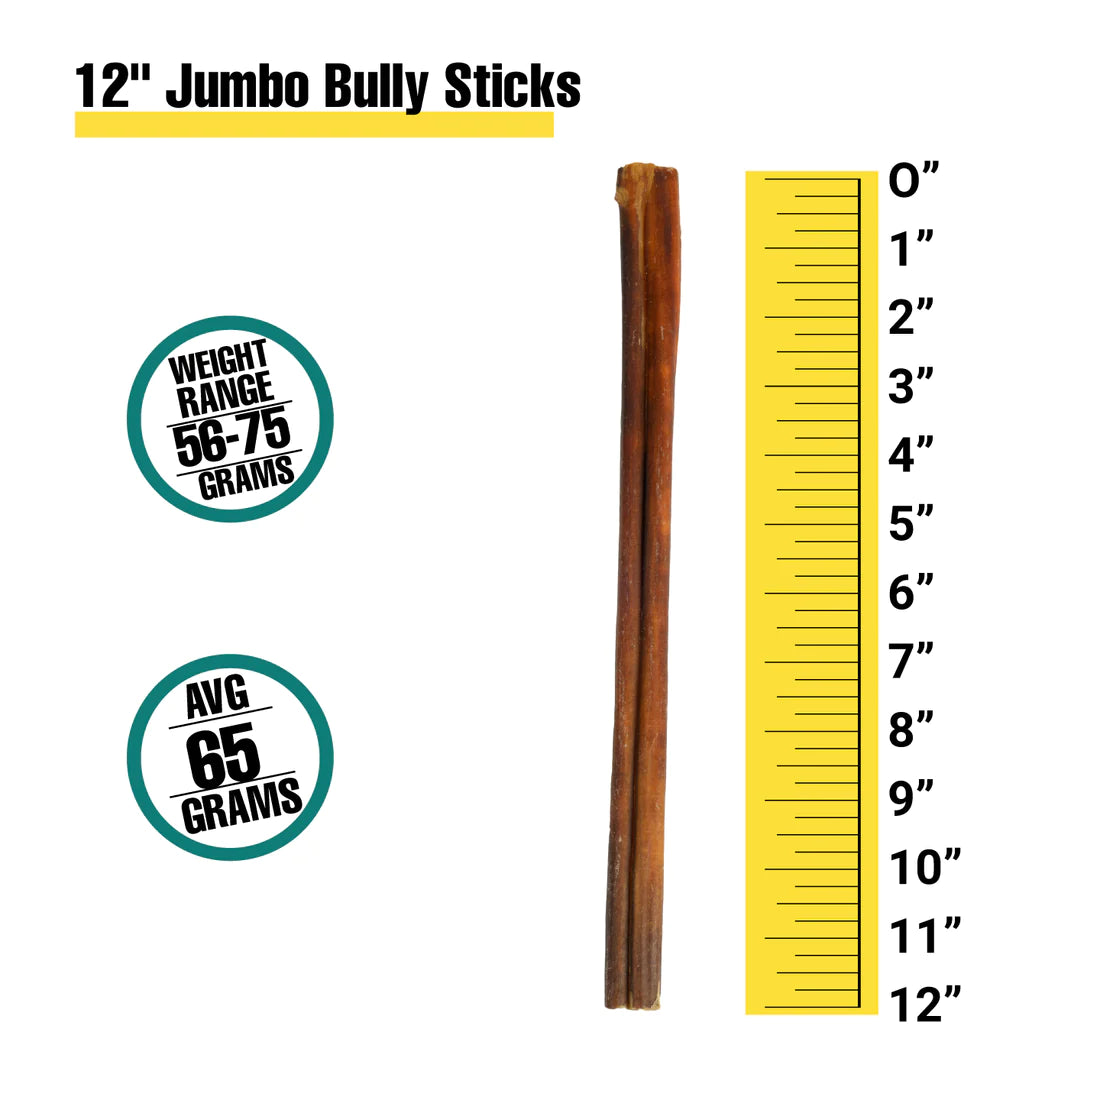 Jumbo Bully Sticks - 12 Inch